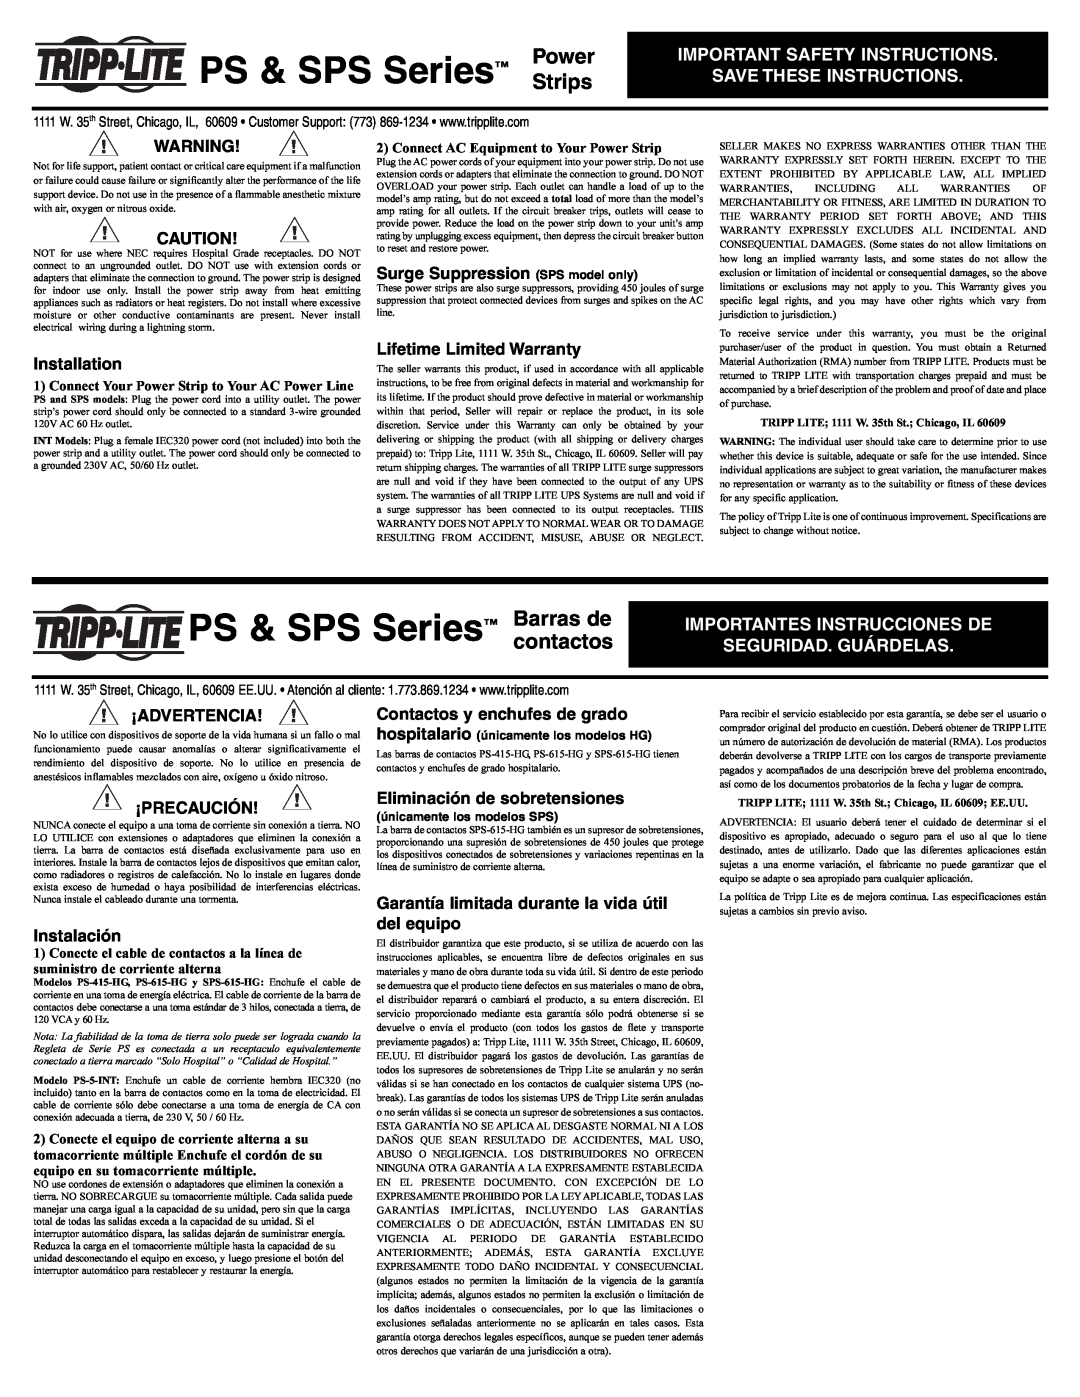 Tripp Lite SPS Series important safety instructions Important Safety Instructions Save These Instructions, Installation 